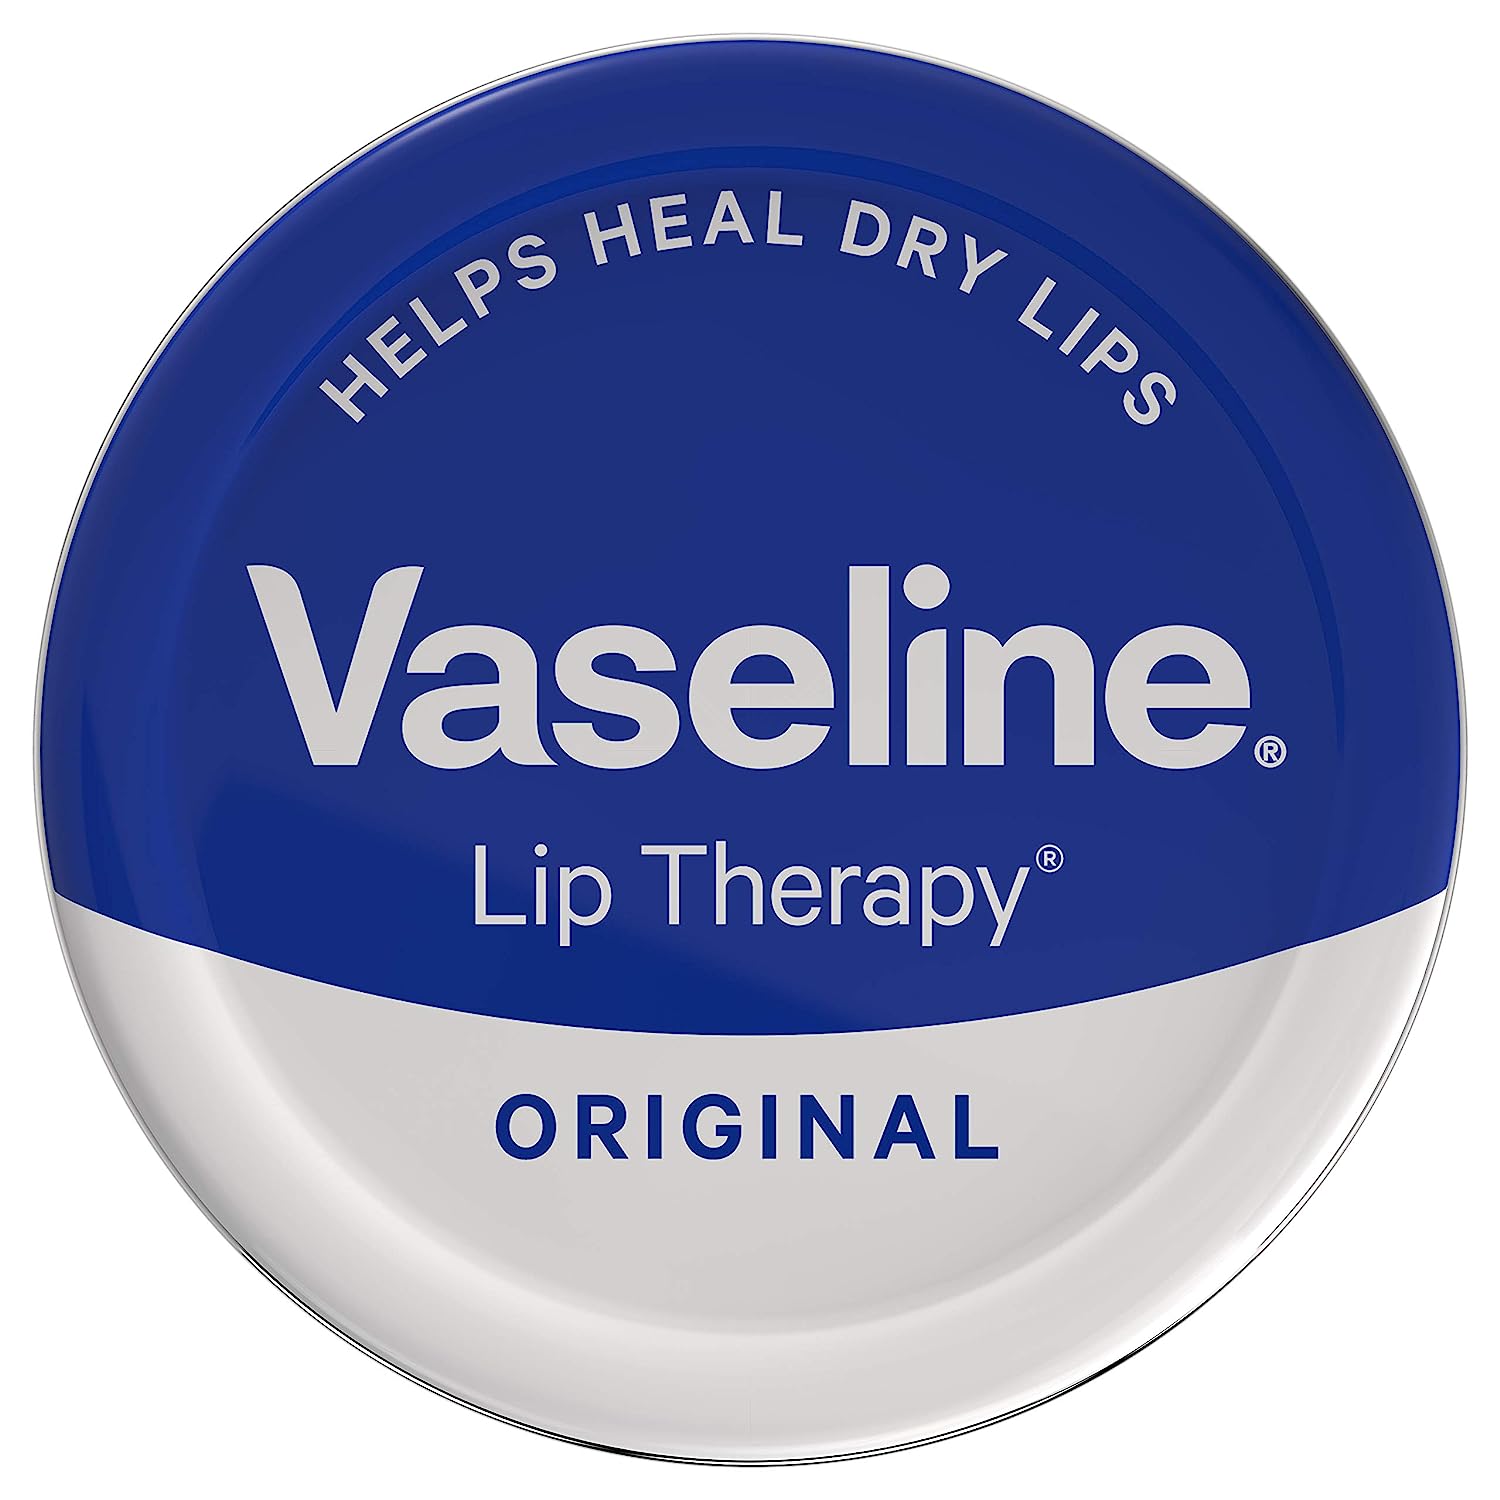 Vaseline Lip Therapy Original - 20G